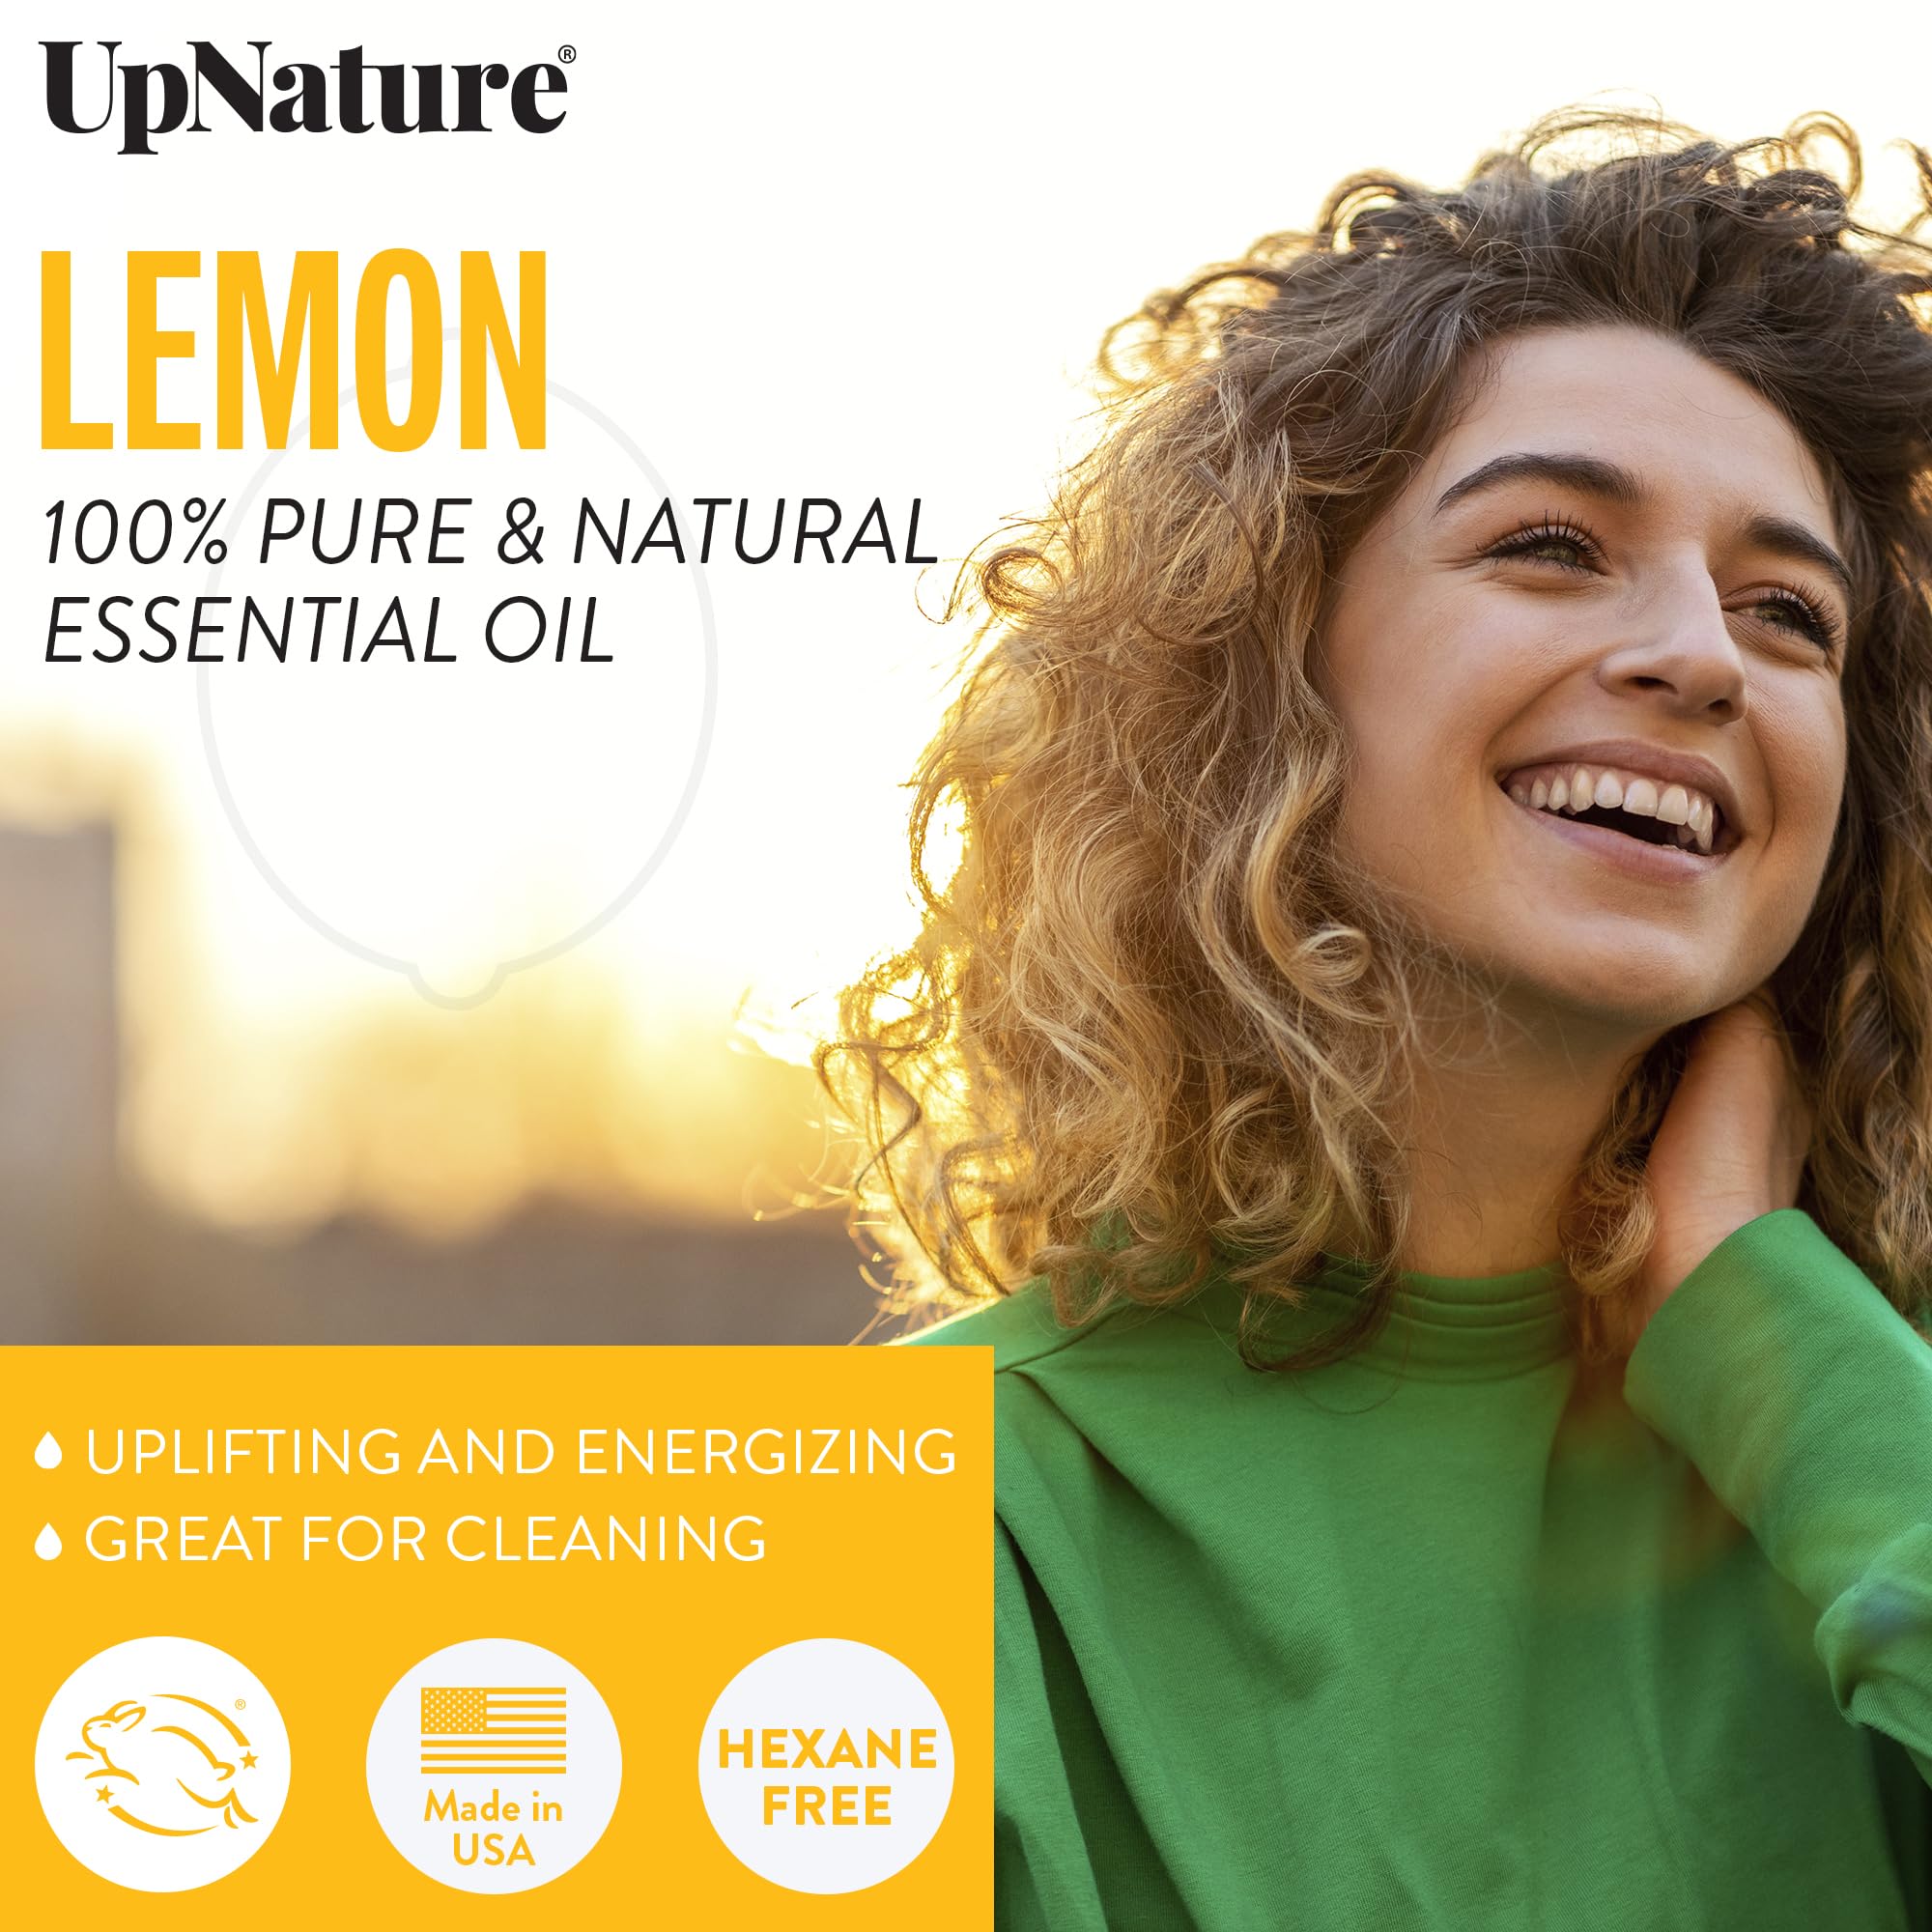 UpNature Lemon Essential Oil - 100% Natural, Undiluted, Pure, Therapeutic Grade, 4oz